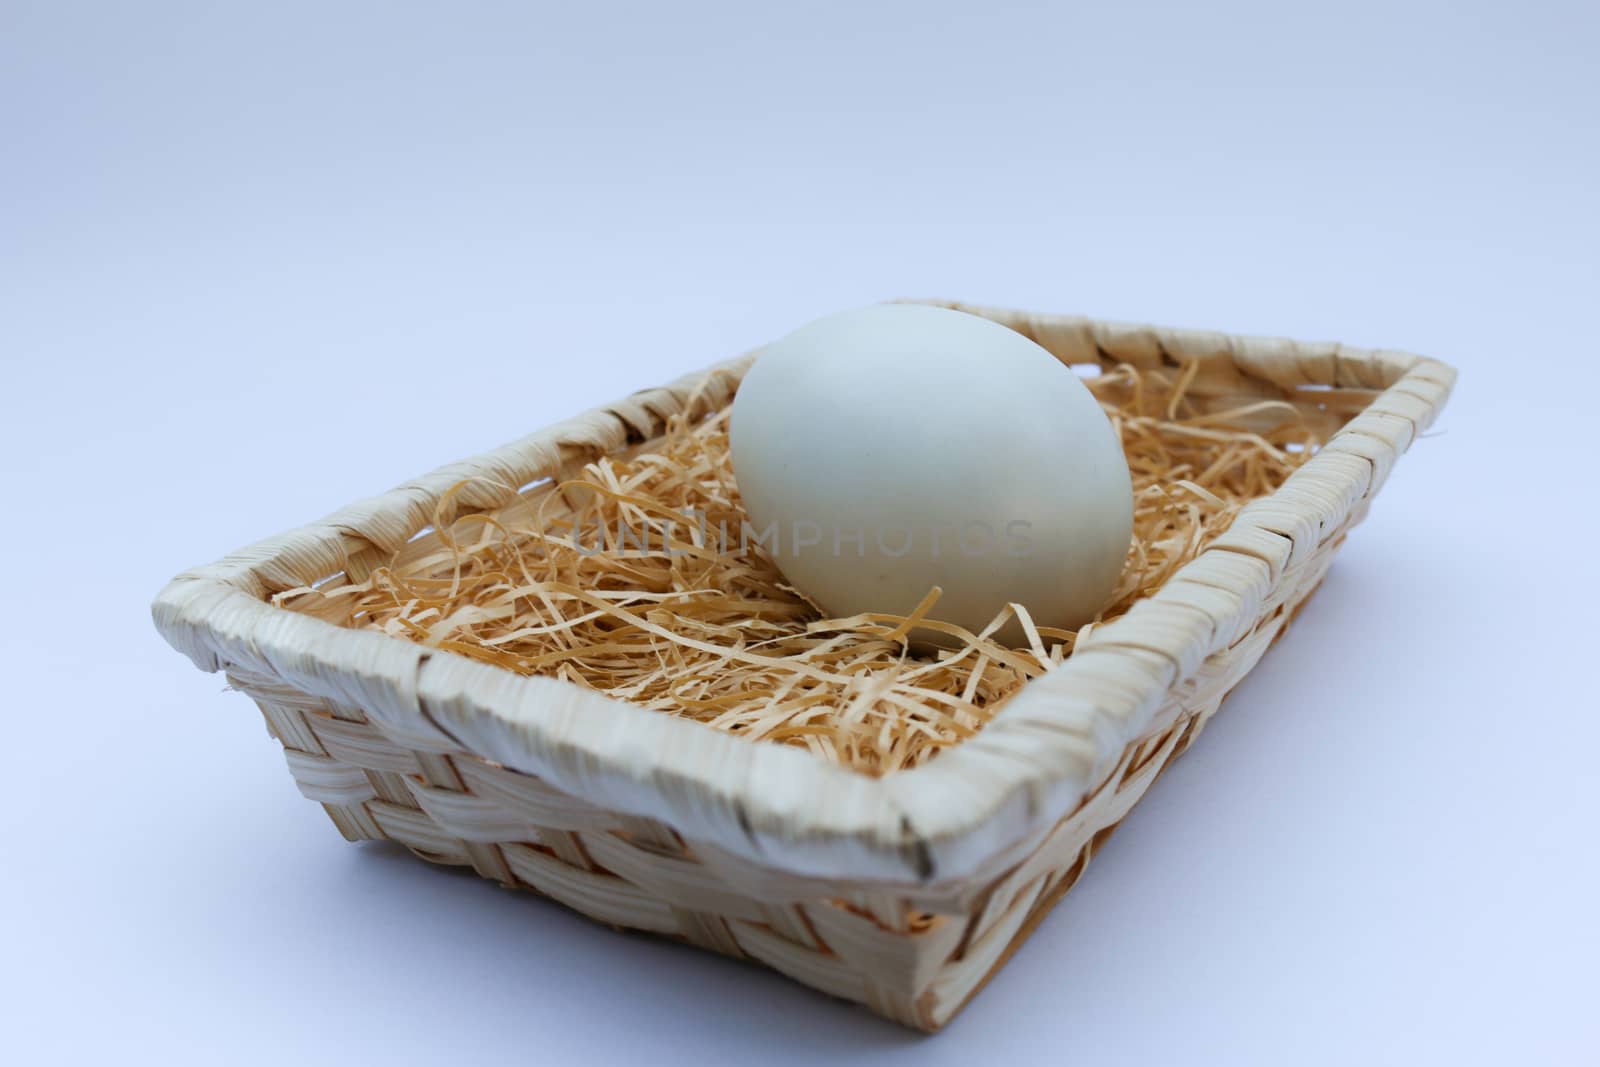 egg in basket wicker on white background by N_u_T